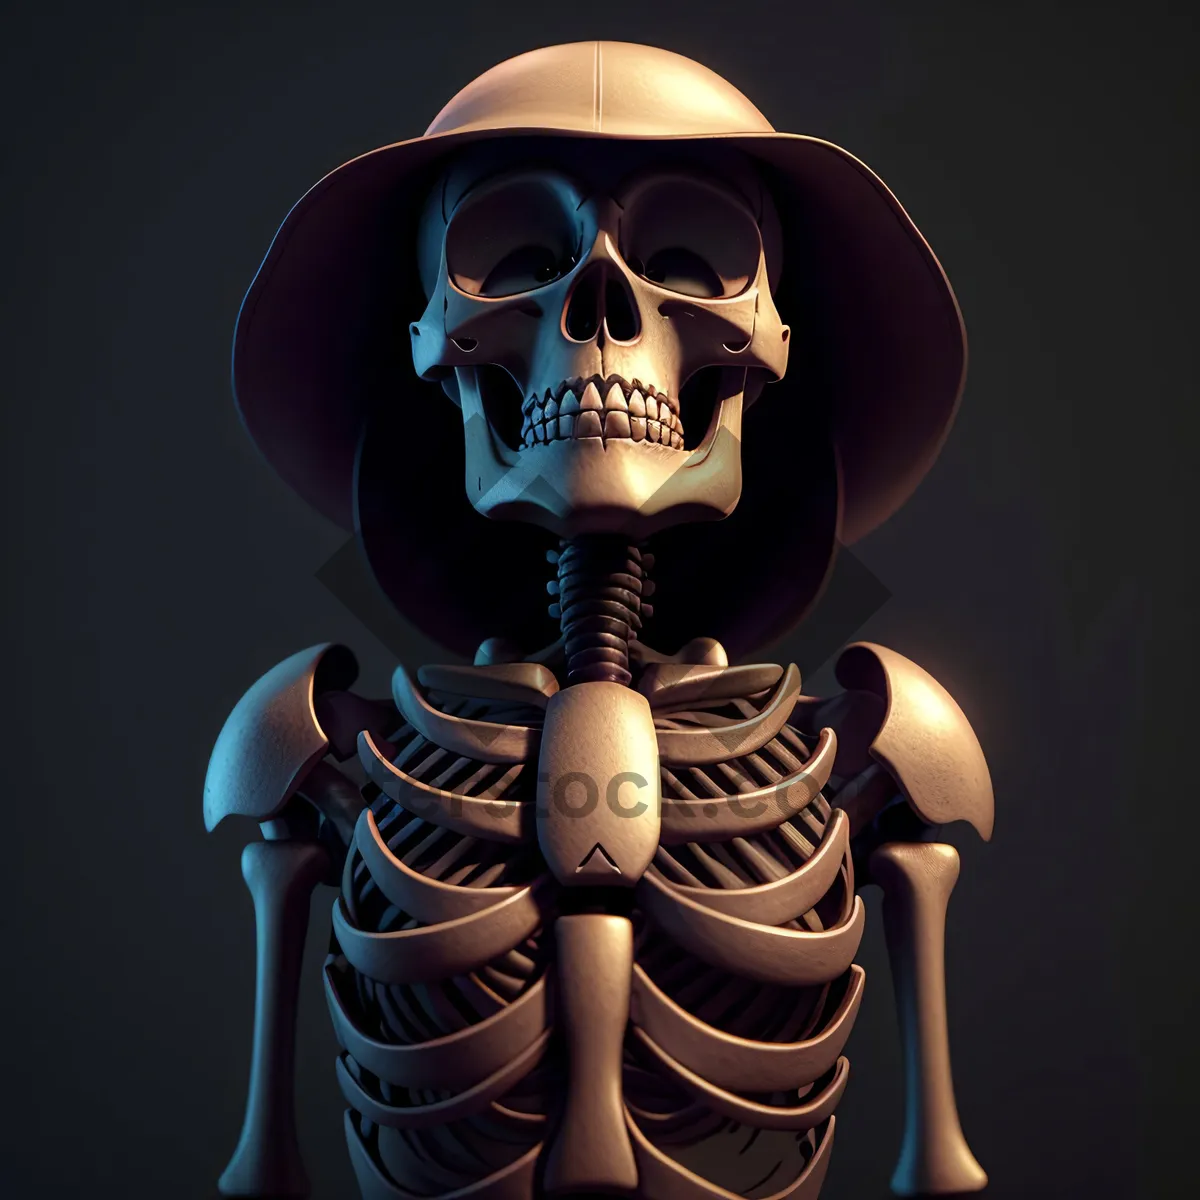 Picture of Skeletal Anatomy: 3D Human Skull Sculpture